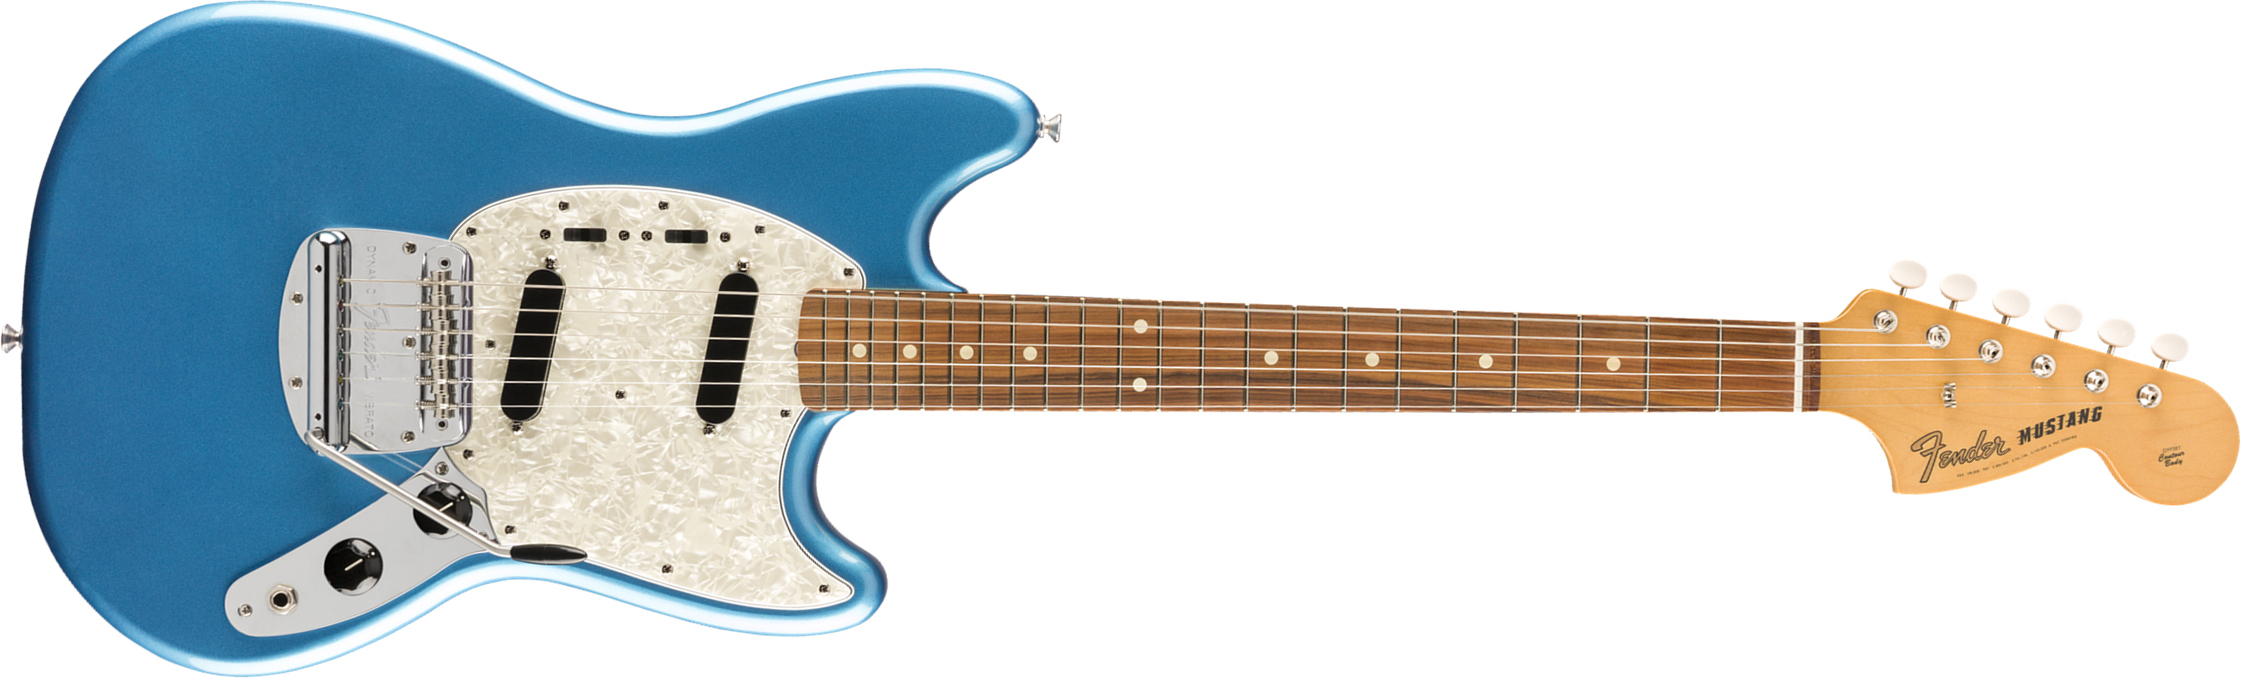 Fender Mustang 60s Vintera Vintage Mex Pf - Lake Placid Blue - Retro rock electric guitar - Main picture